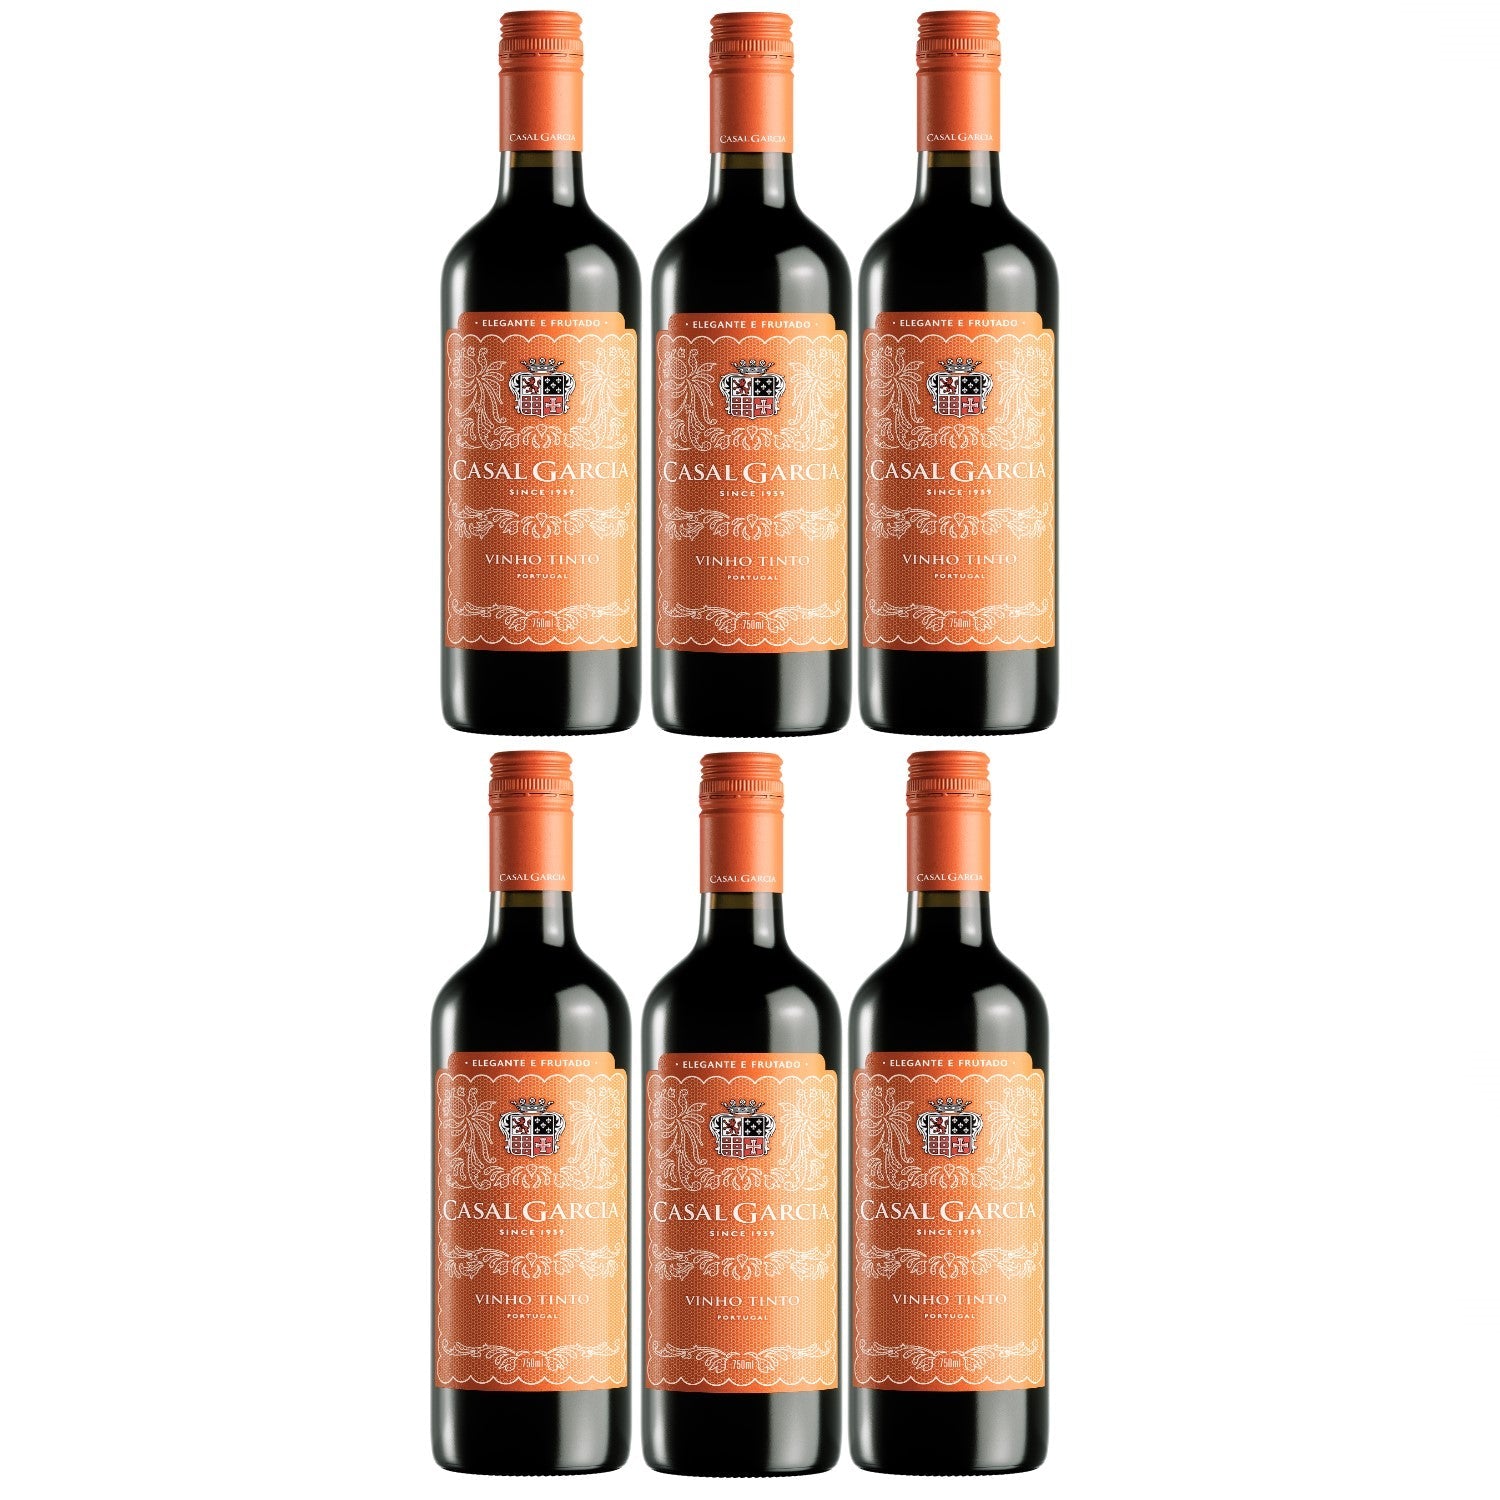 Casal Garcia Vinho Tinto IG Lisboa Rotwein Wein trocken Portugal (6 x 0.75l) - Versanel -